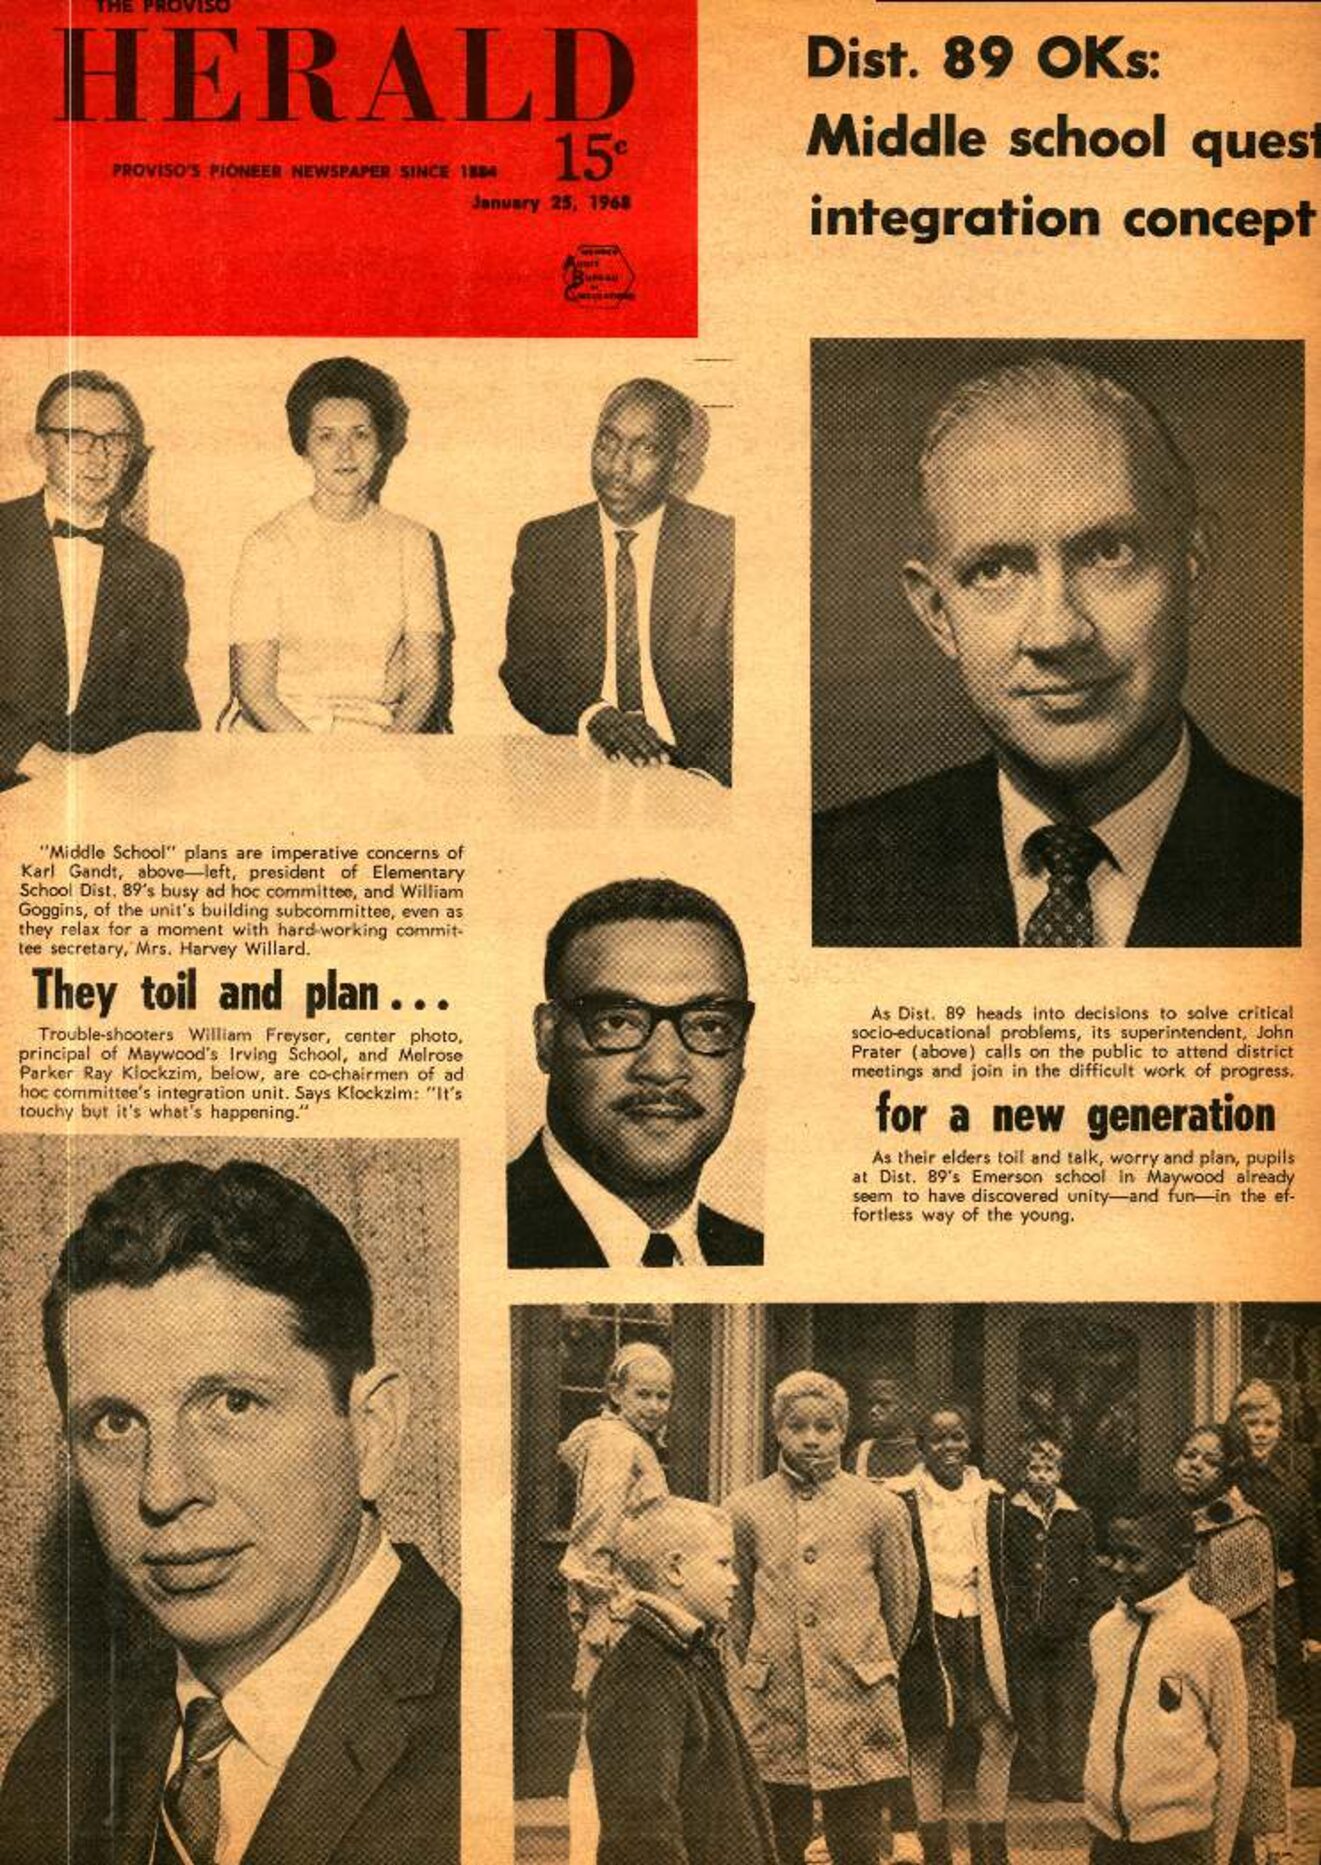 The Herald – 19680125